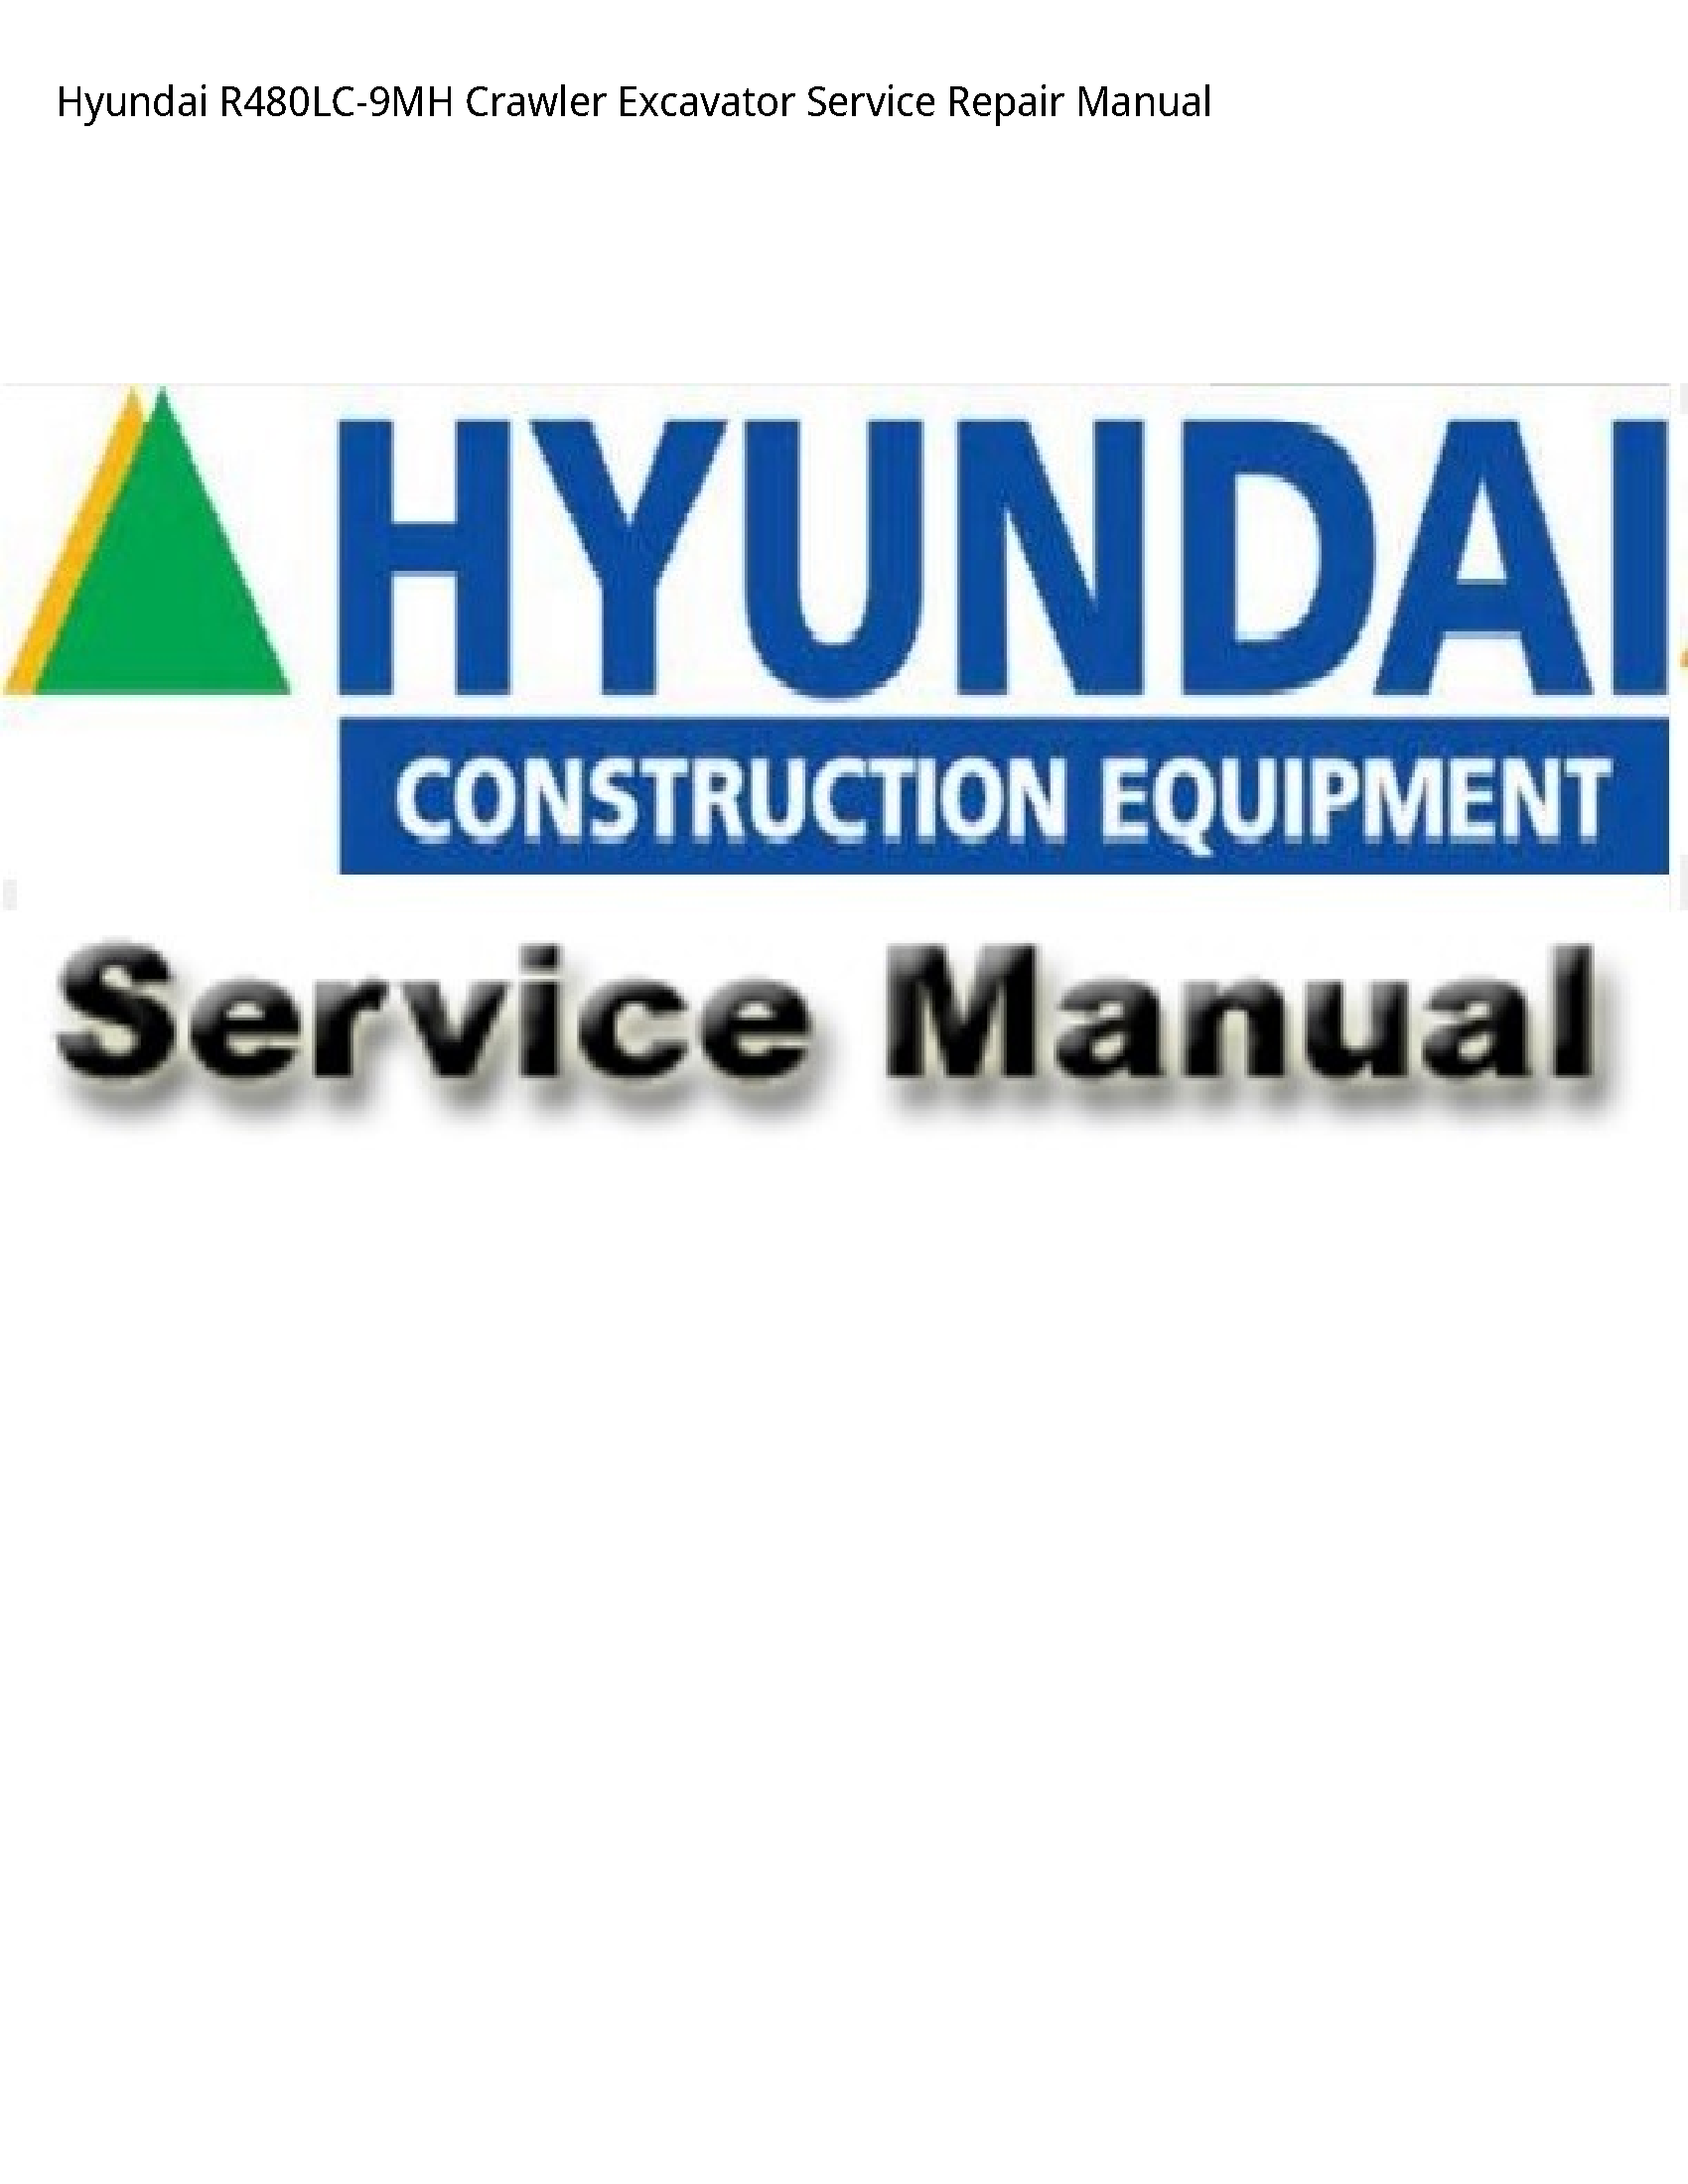 Hyundai R480LC-9MH Crawler Excavator manual